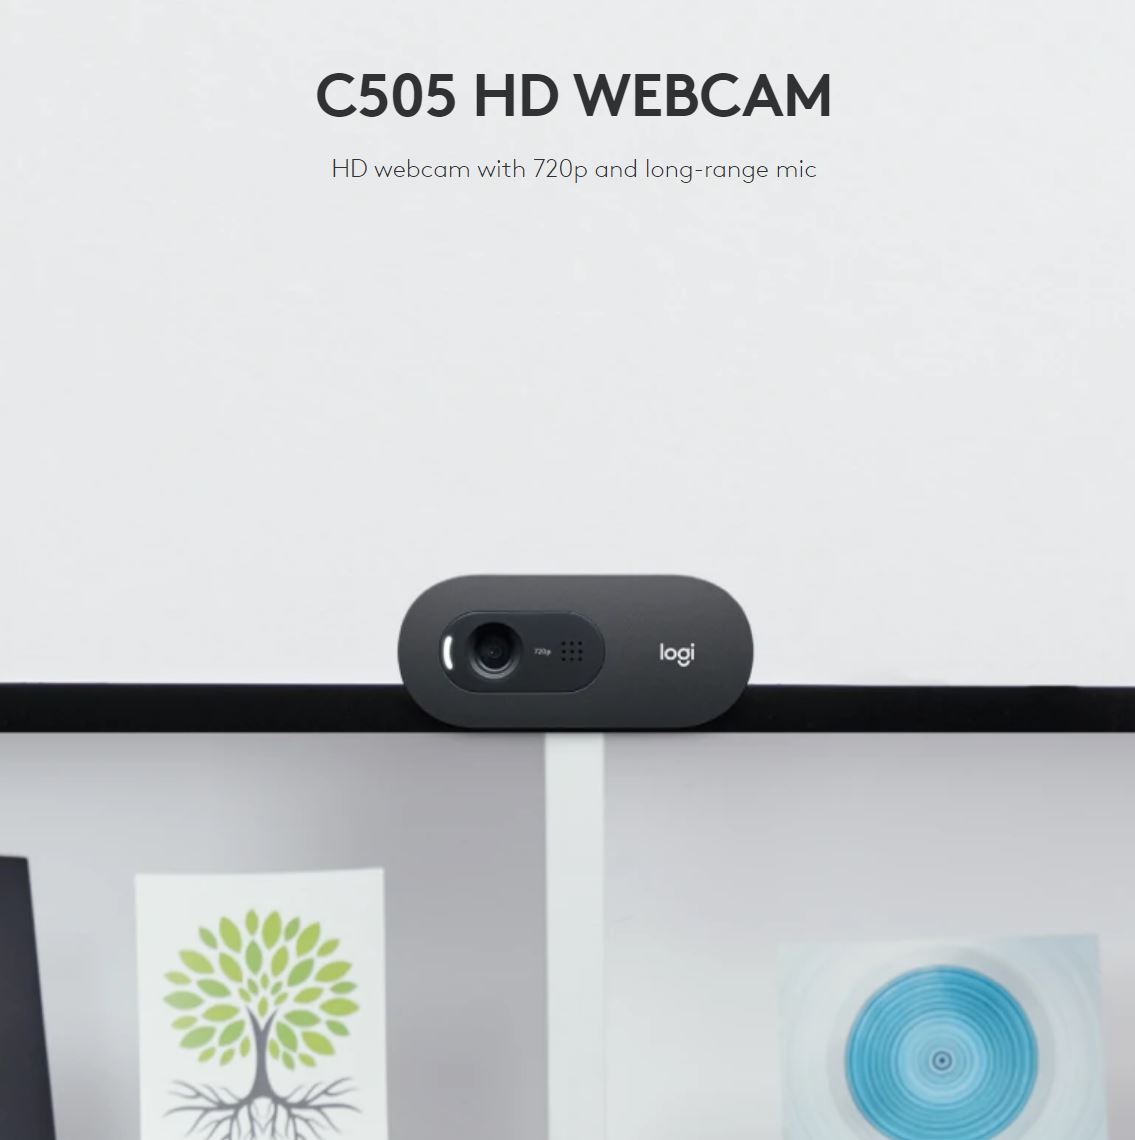 Camara webcam Logitech HD C270 Microfono 720p 30fps